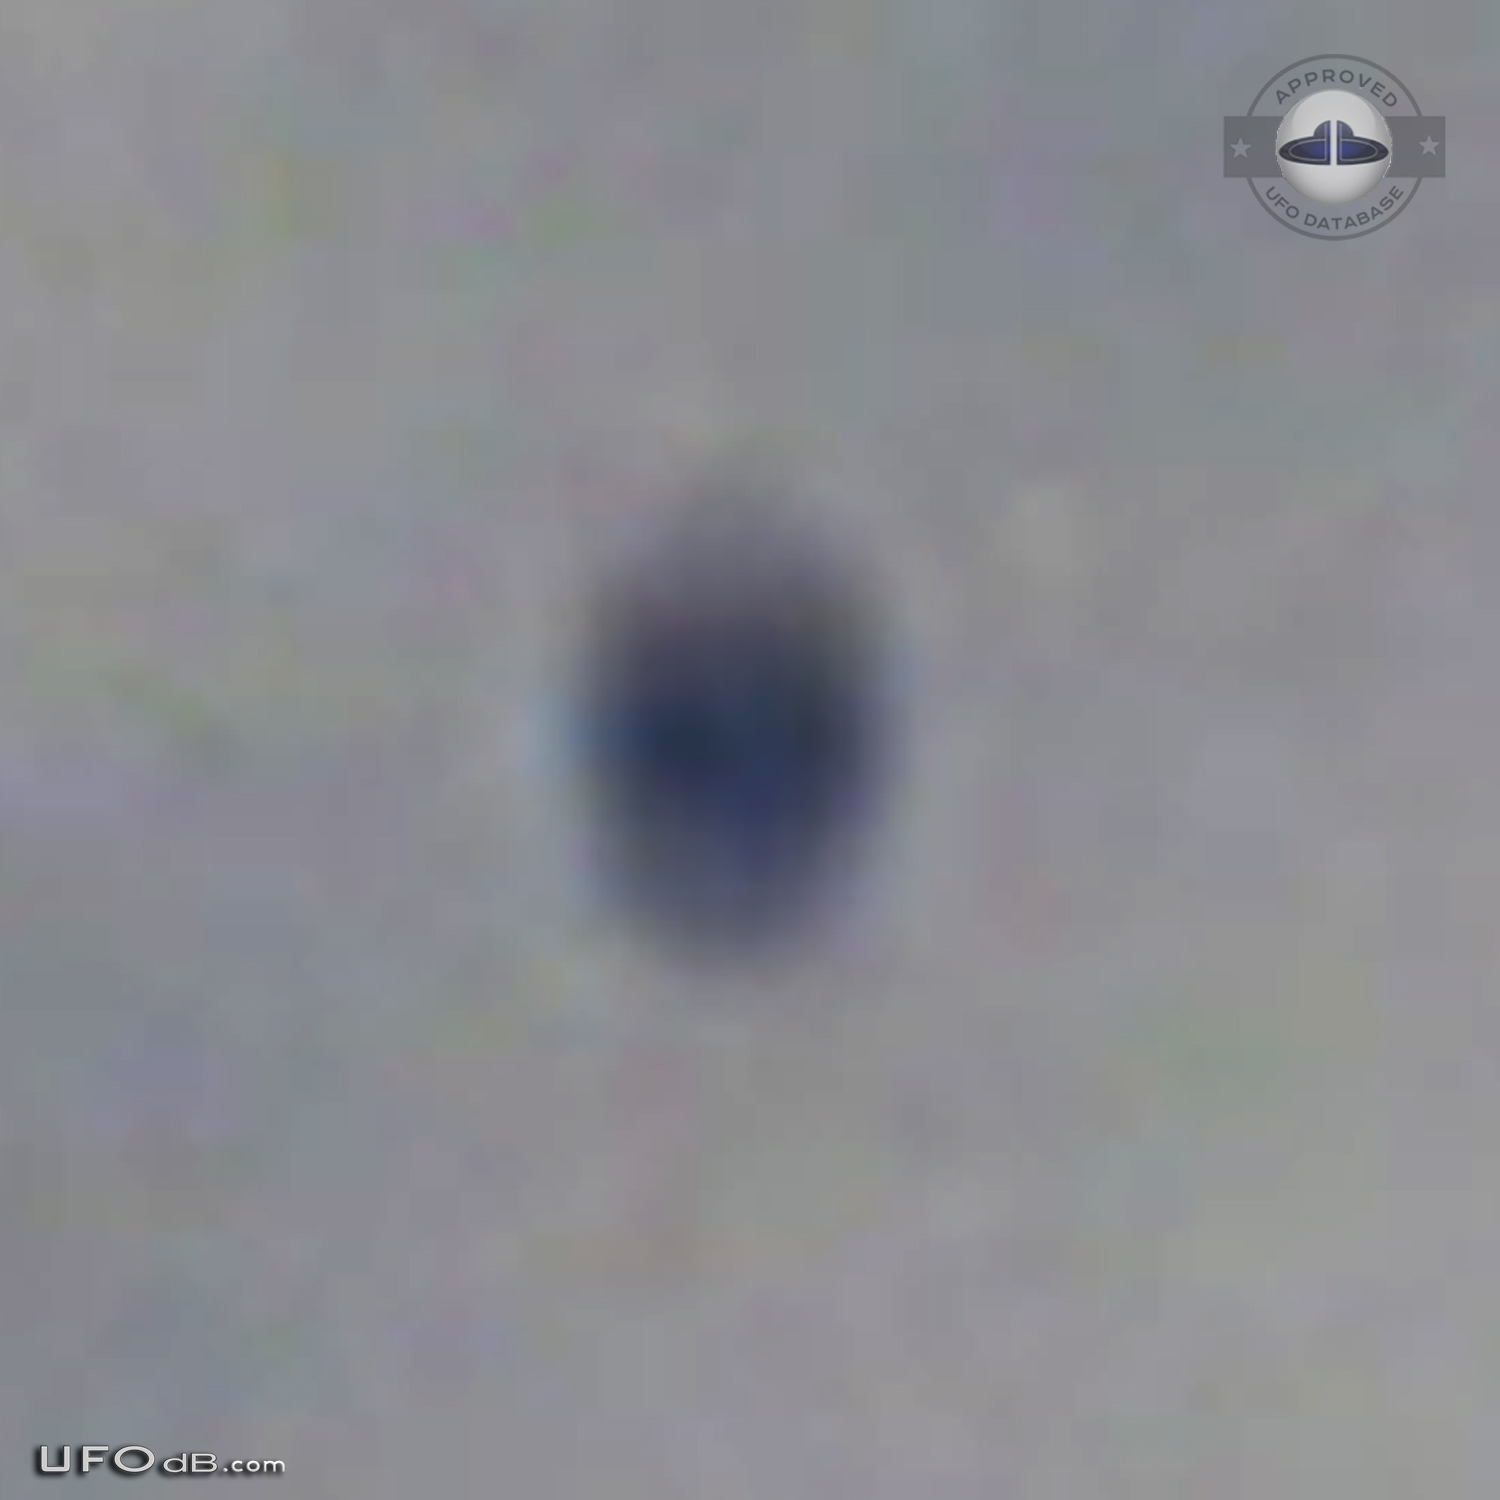 Four grey black disc UFOs near the airplane Mississauga, Ontario 2010 UFO Picture #531-4